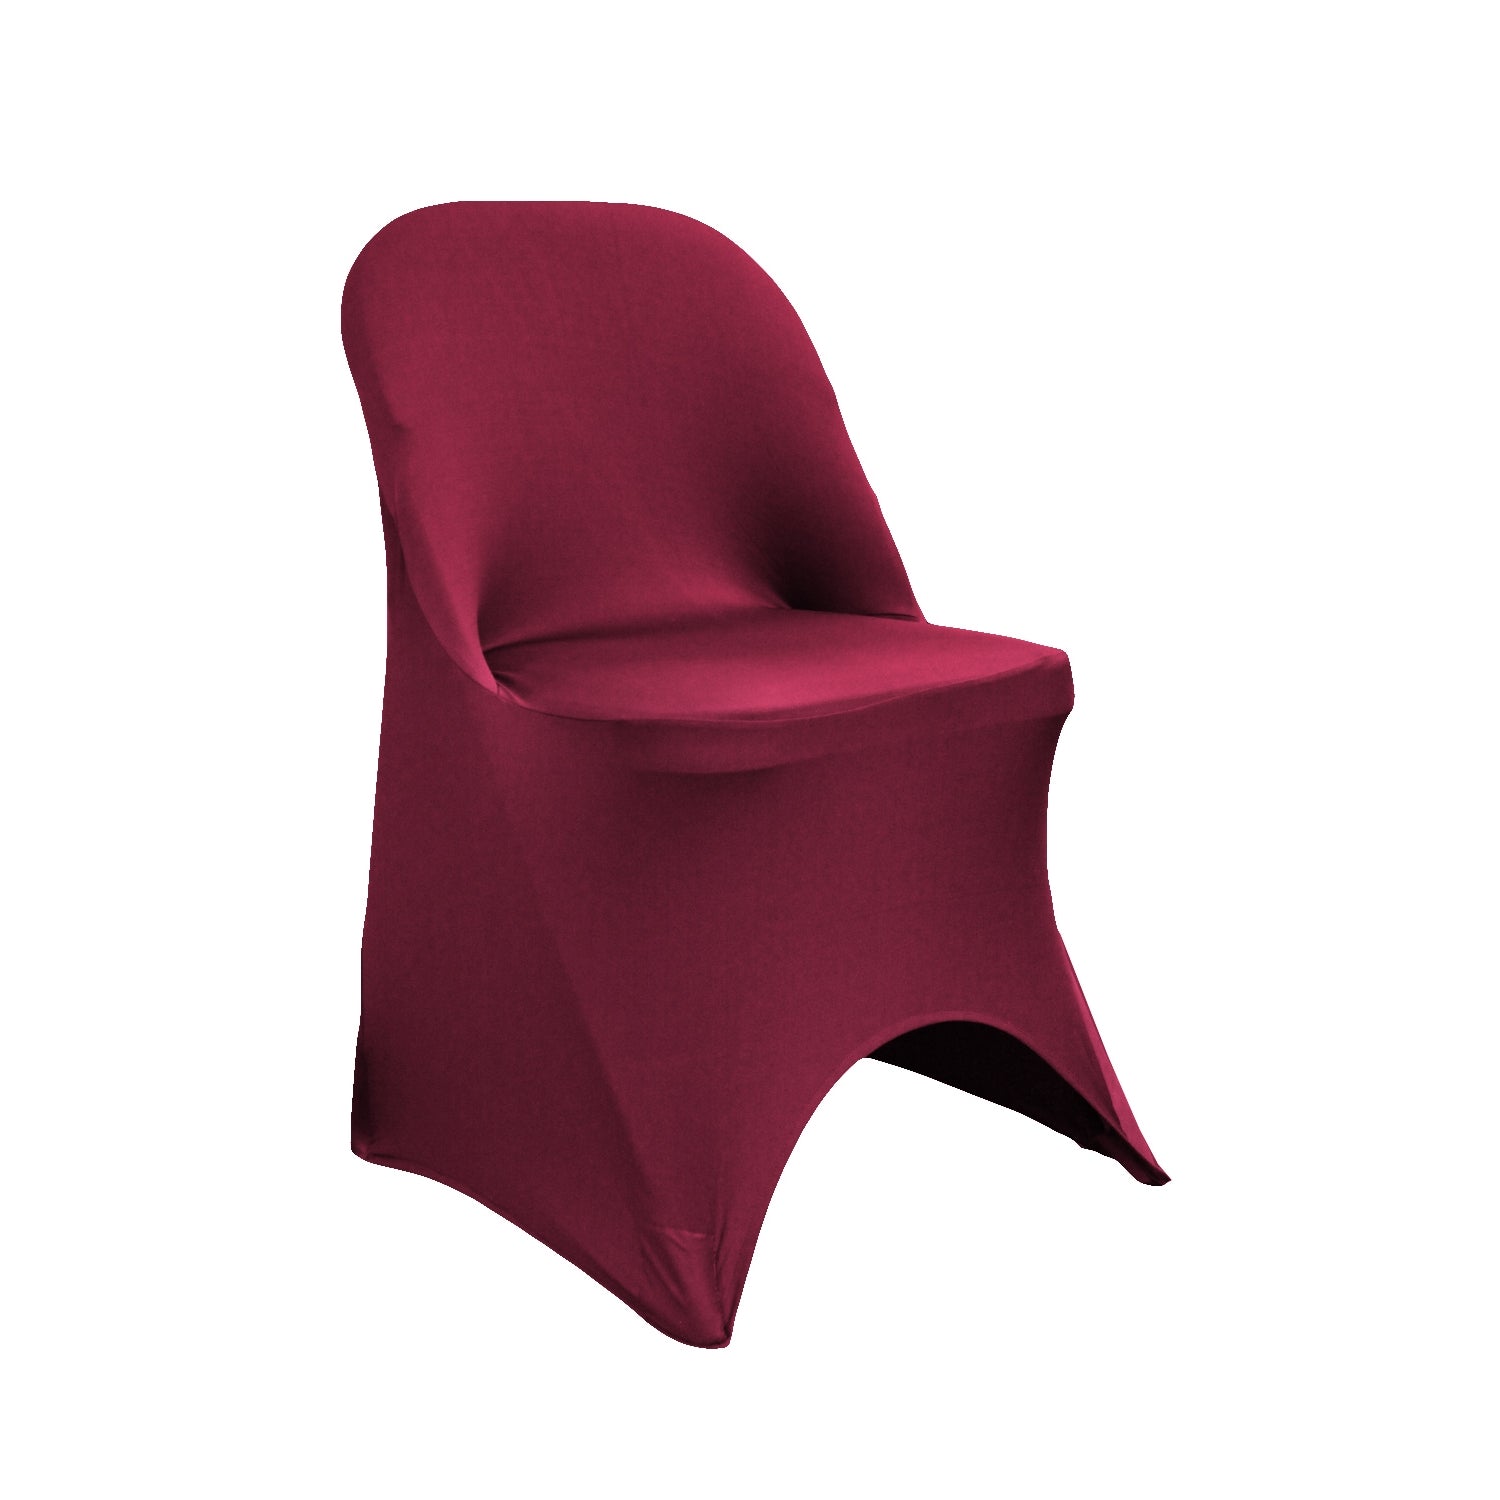 Folding Spandex Chair Cover - Burgundy - CV Linens